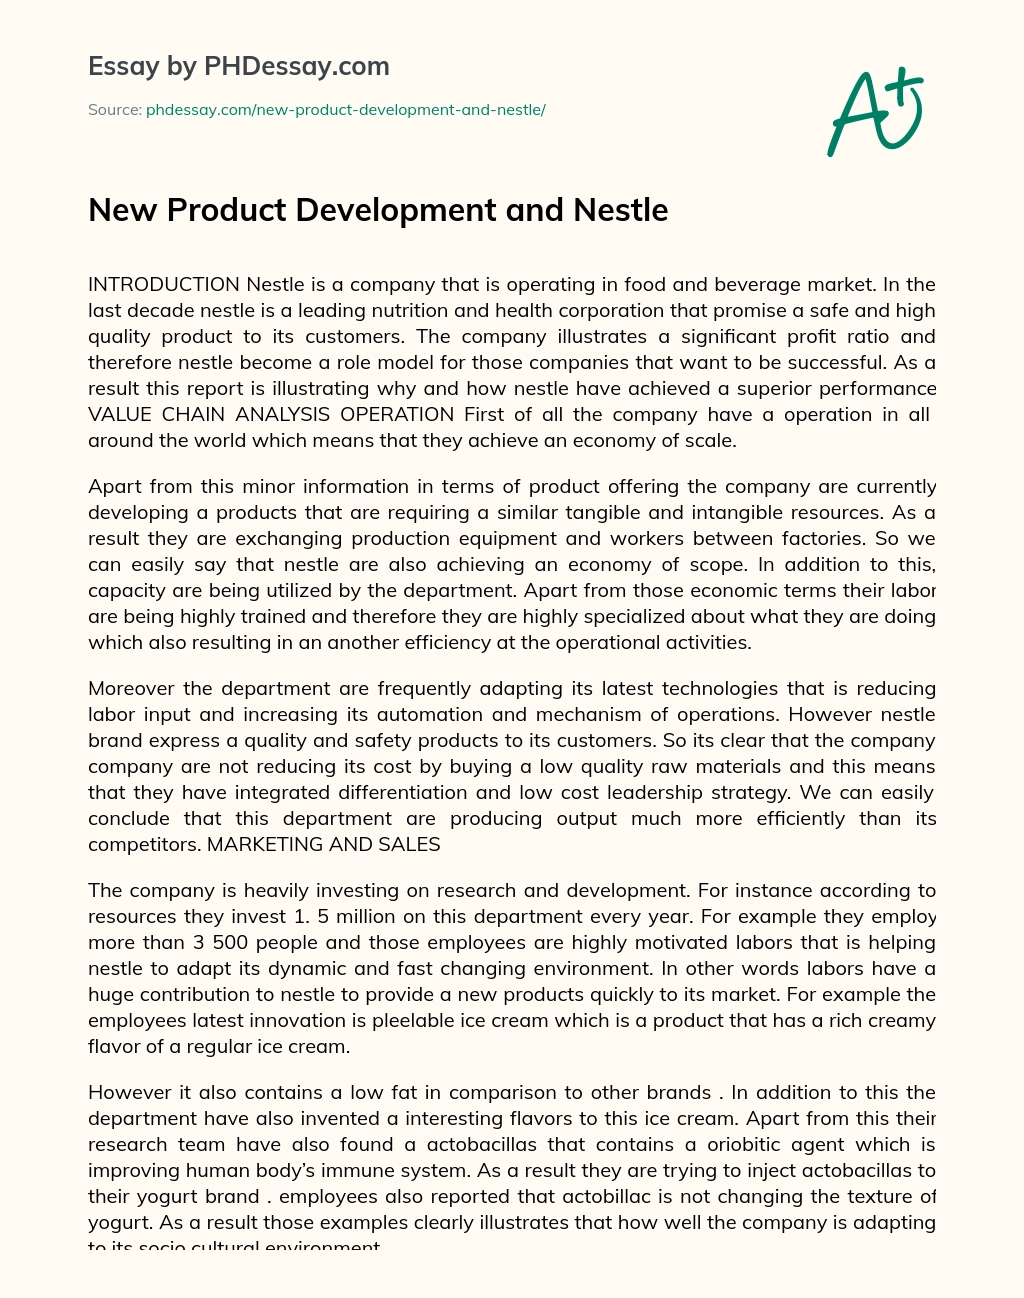 importance of new product development process